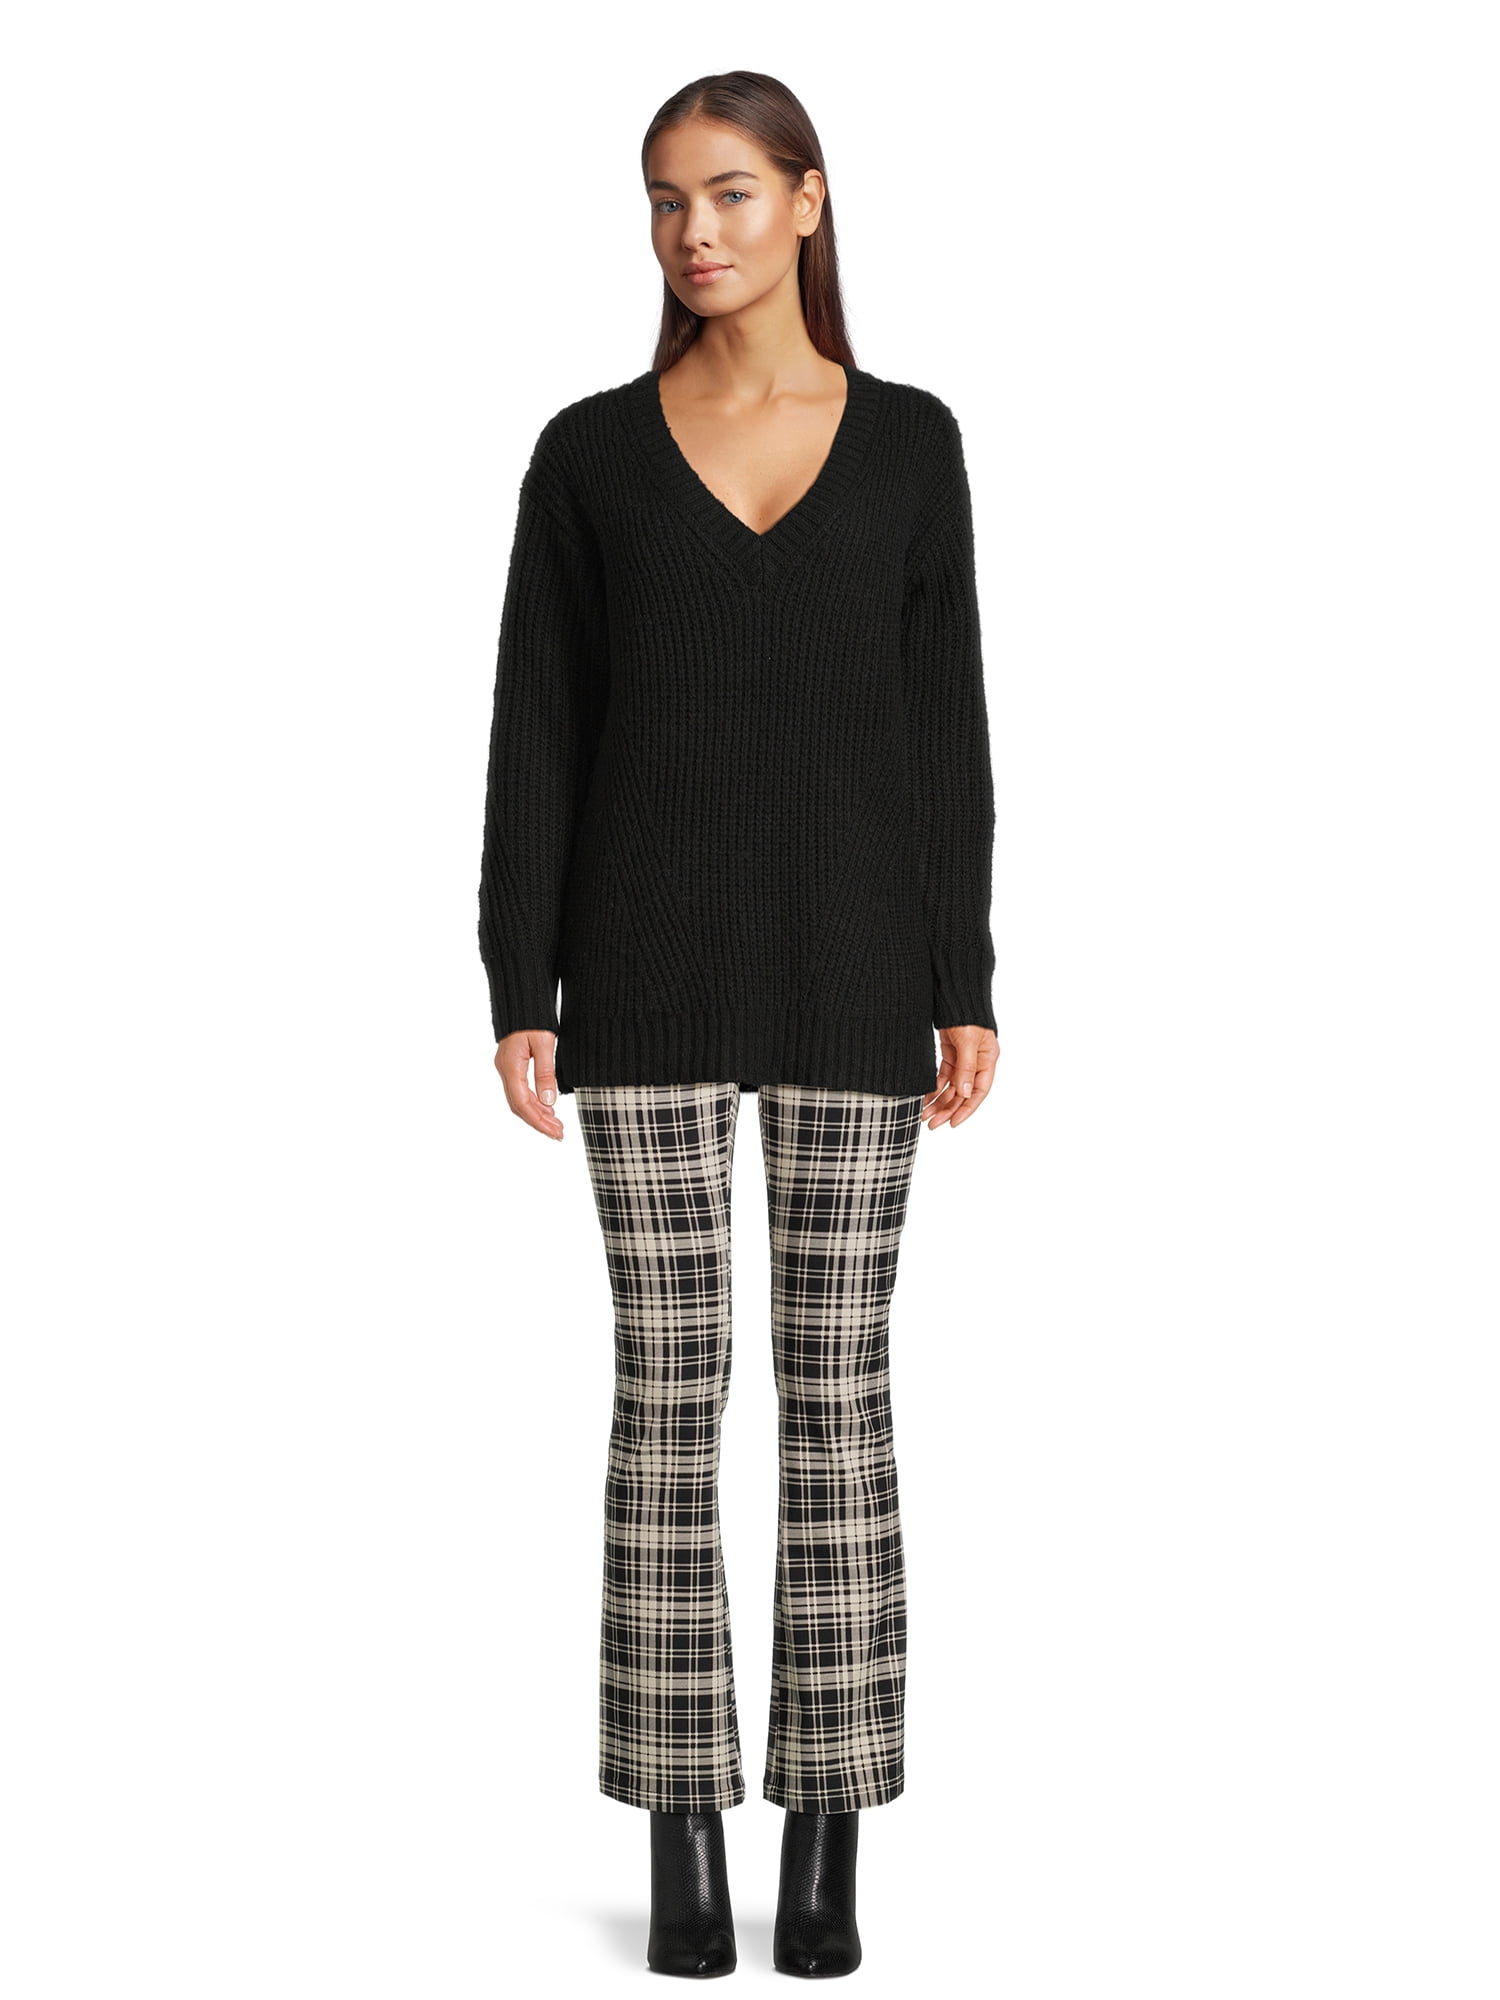 No Boundaries Black Flare Pants Size M - $14 (30% Off Retail